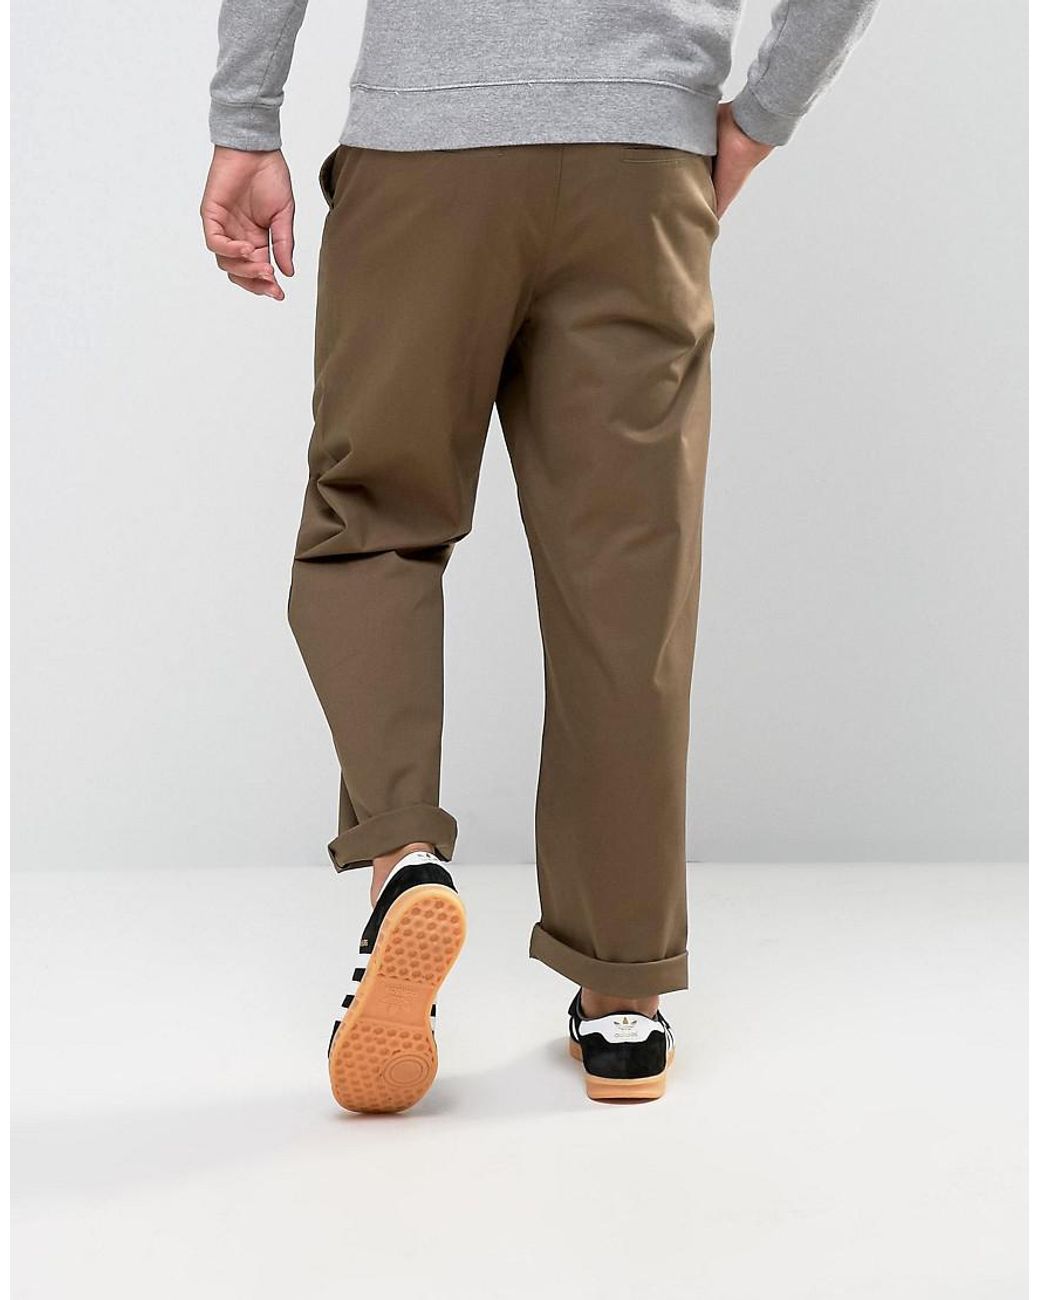 Buy Green Trousers  Pants for Men by GAS Online  Ajiocom